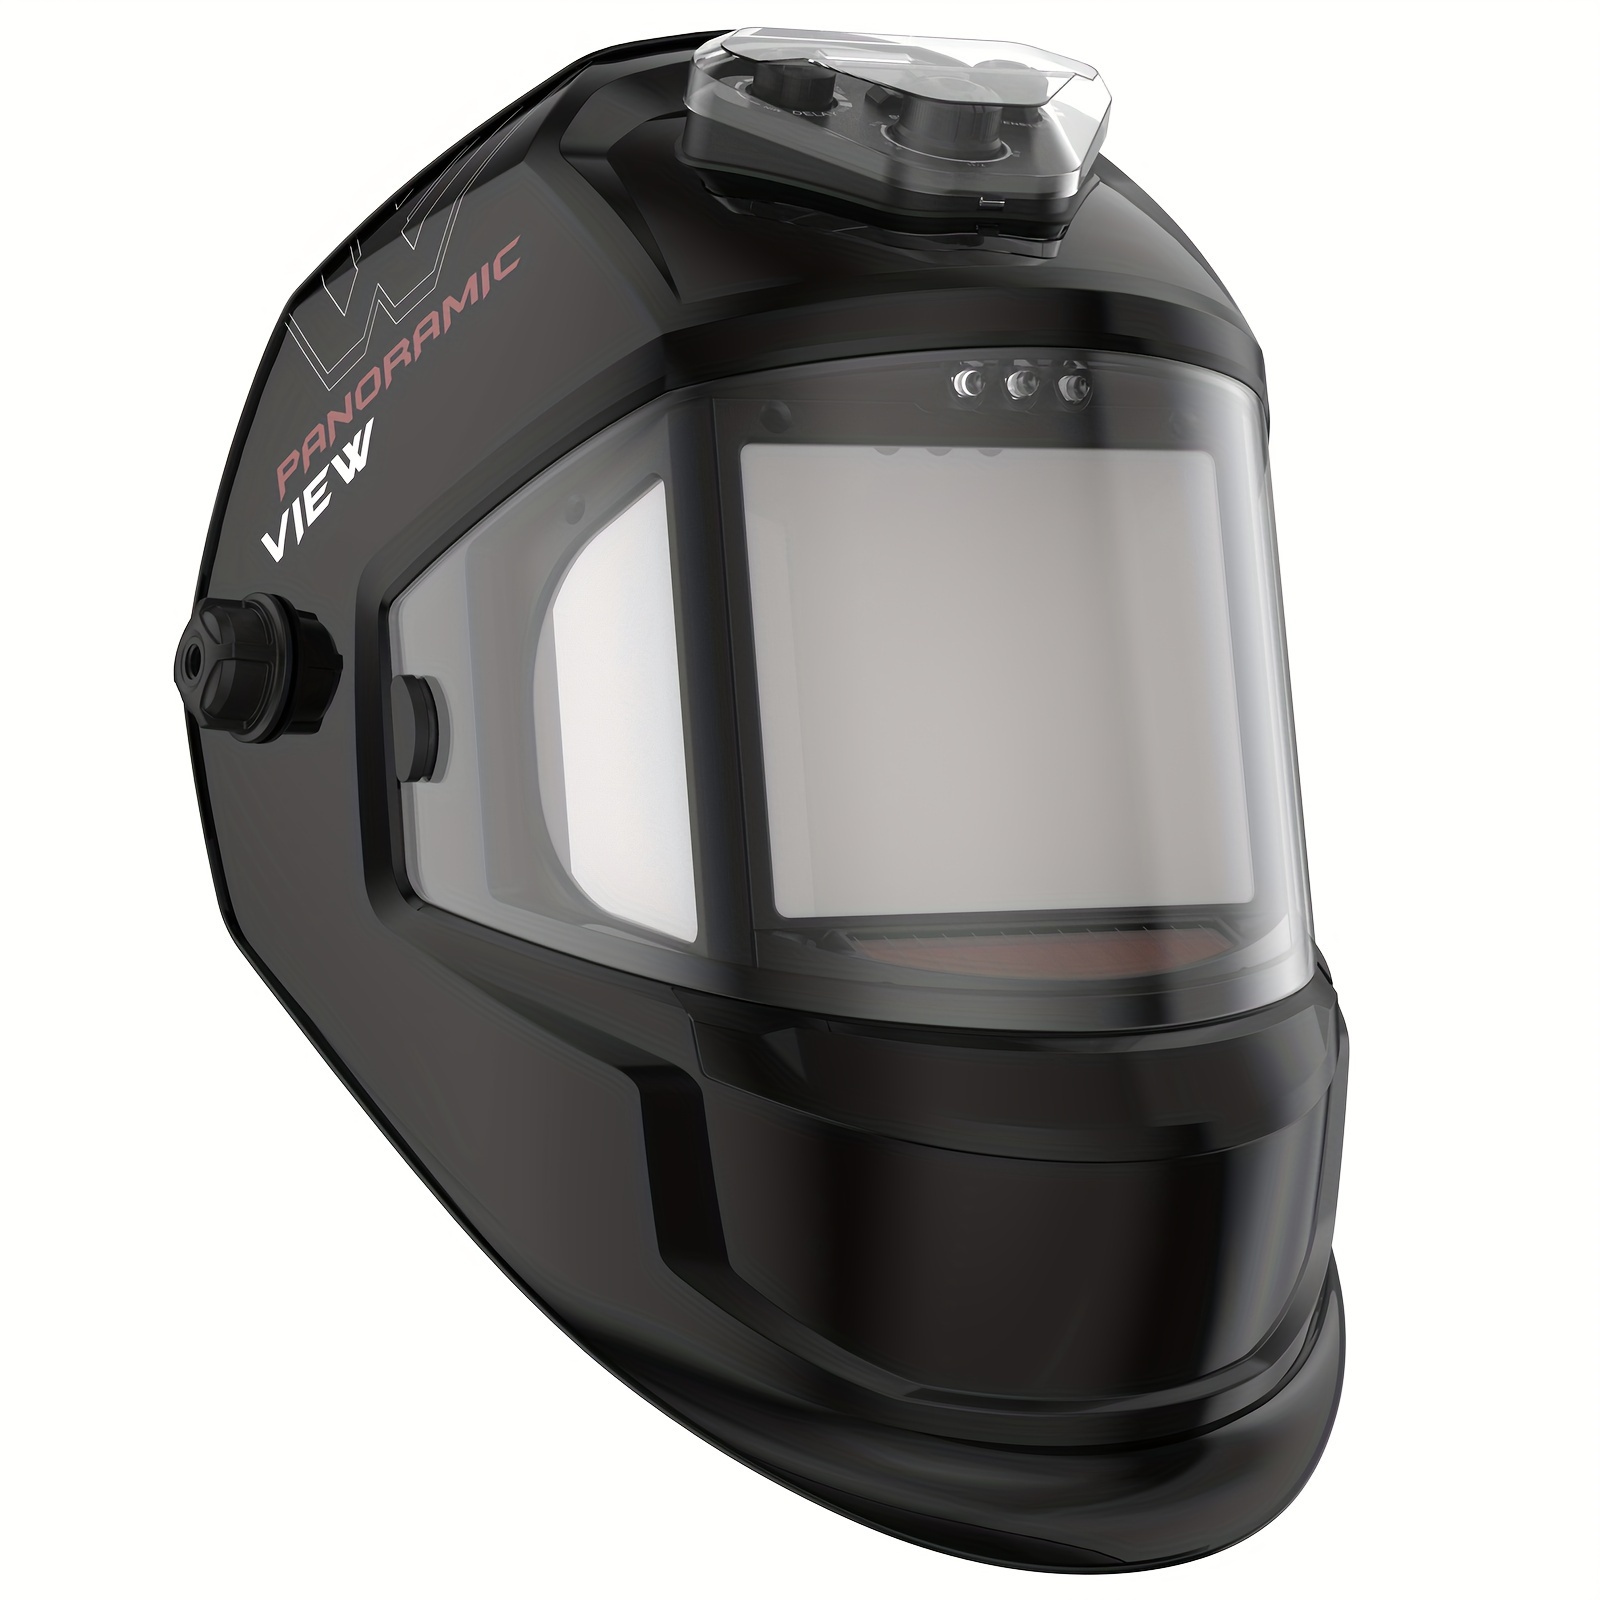 

Yeswelder Panoramic View Auto Darkening Welding Helmet, Large Viewing True Color 6 Arc Sensor Welder Mask Sticker